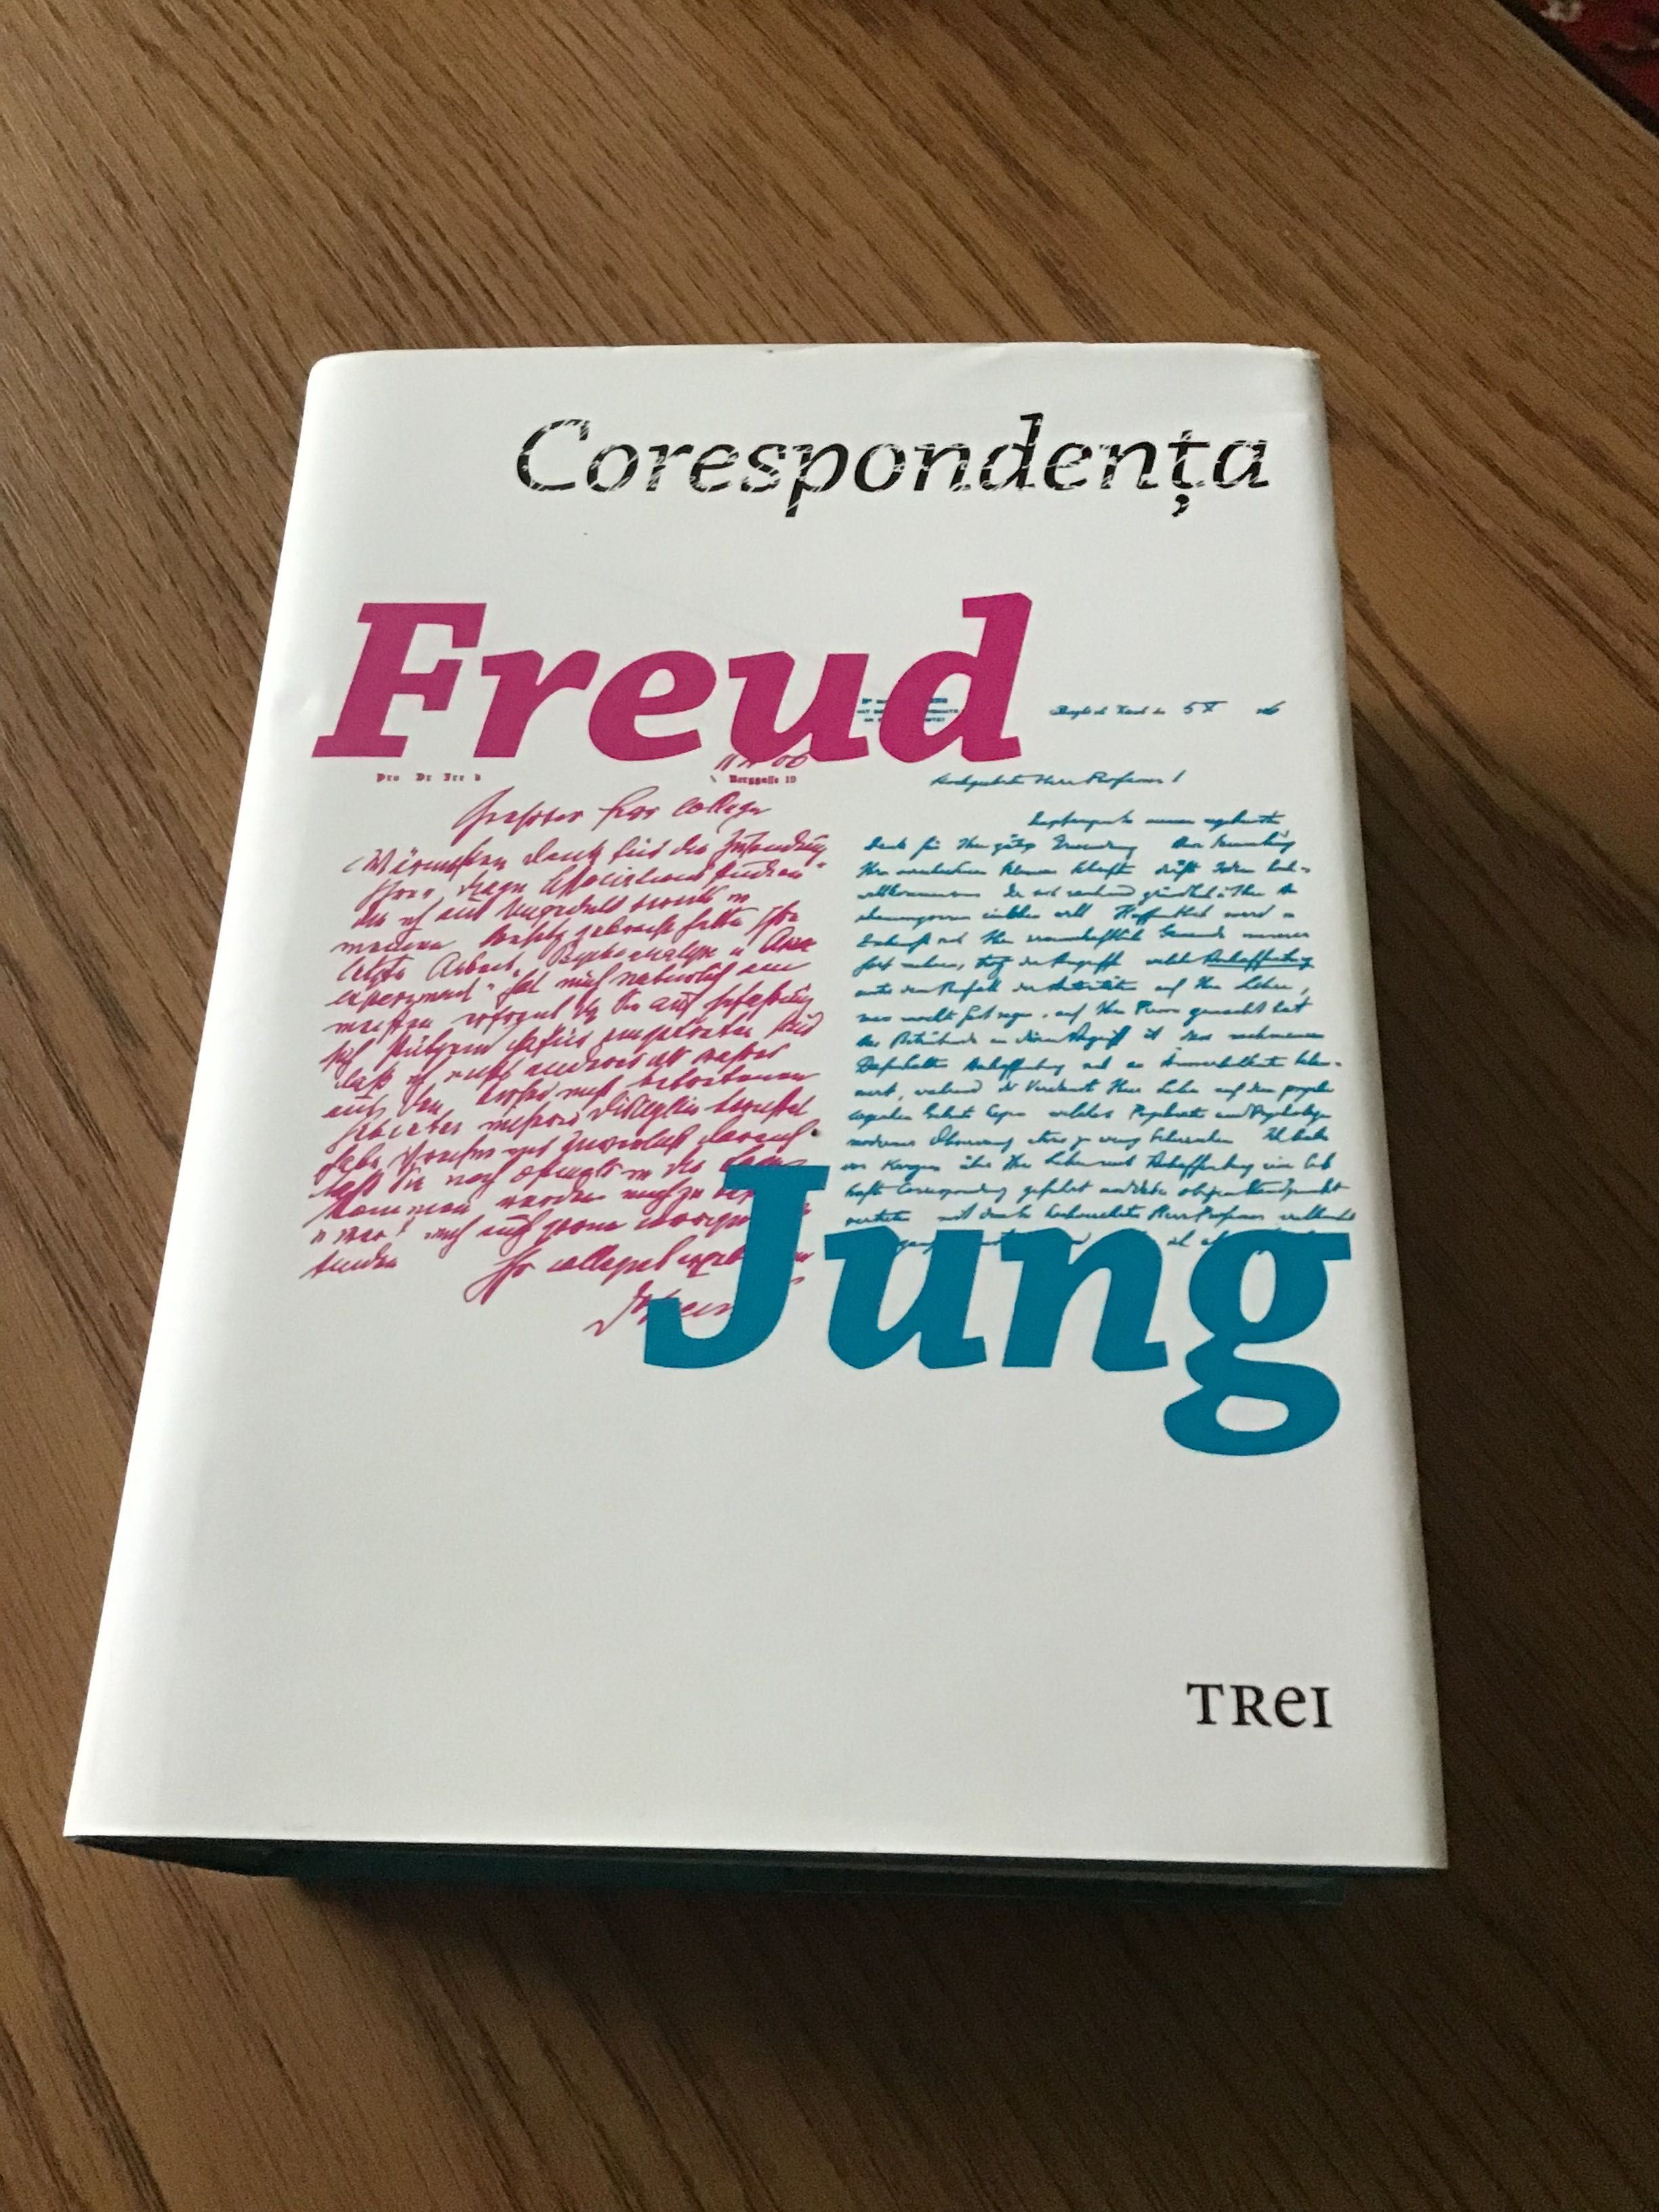 Corespondenţa Freud - Jung